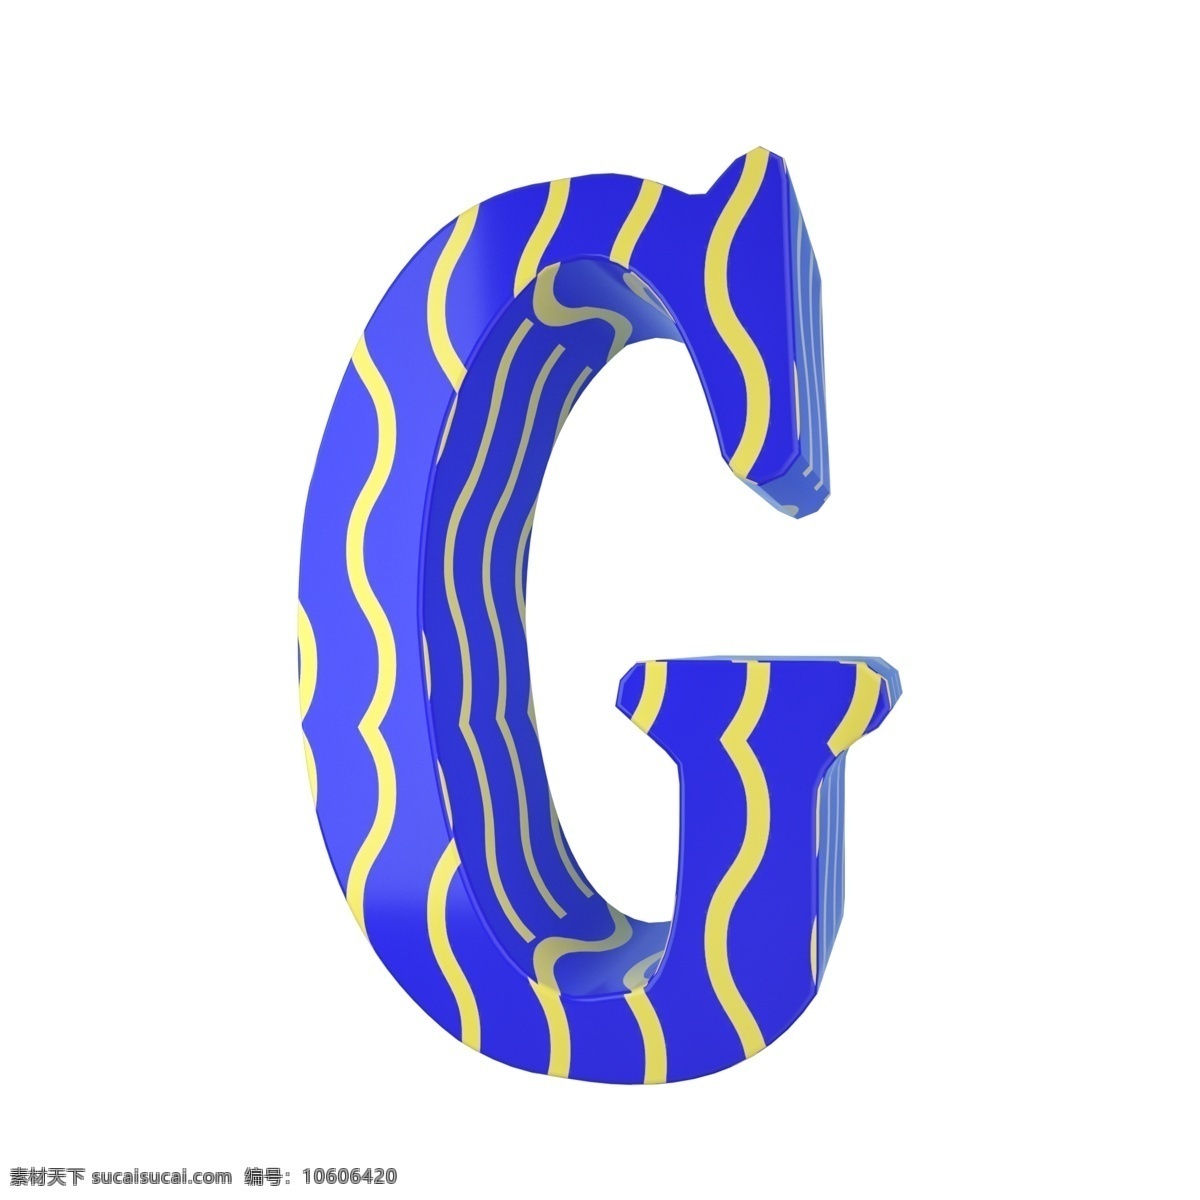 c4d 孟菲斯 风格 立体 字母 g 装饰 3d 孟菲斯风格 黄色 蓝色 创意字母 平面海报配图 电商淘宝装饰 字母g